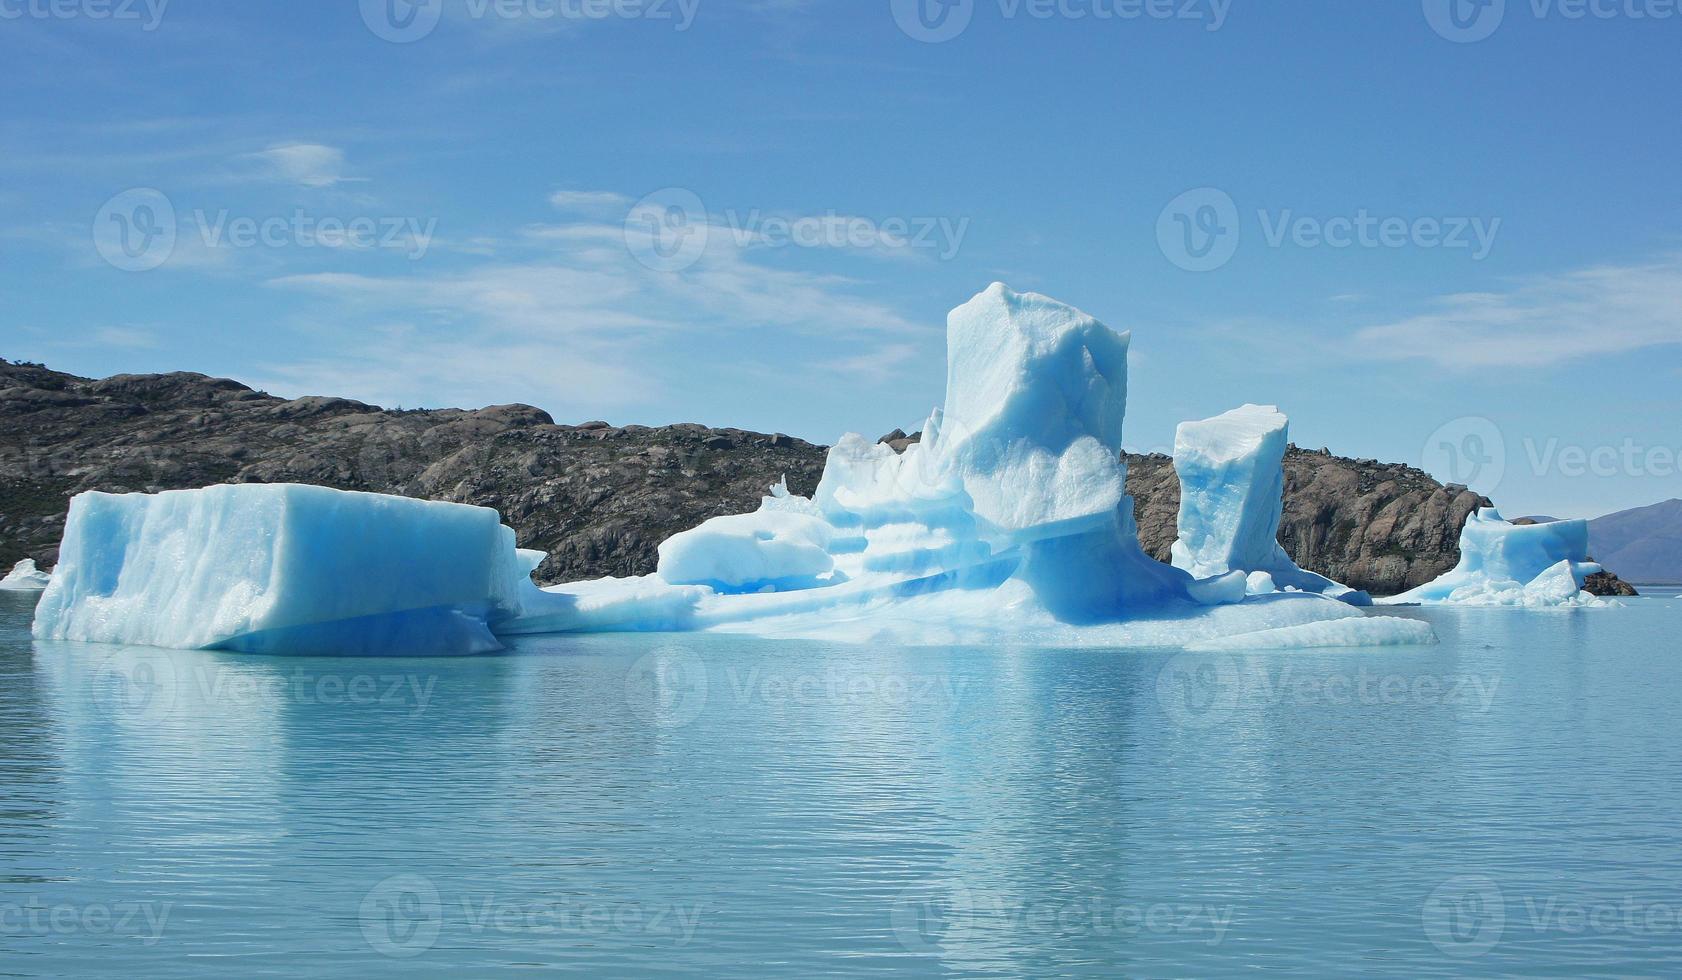 nationaal park los glaciares, patagonië, argentinië foto